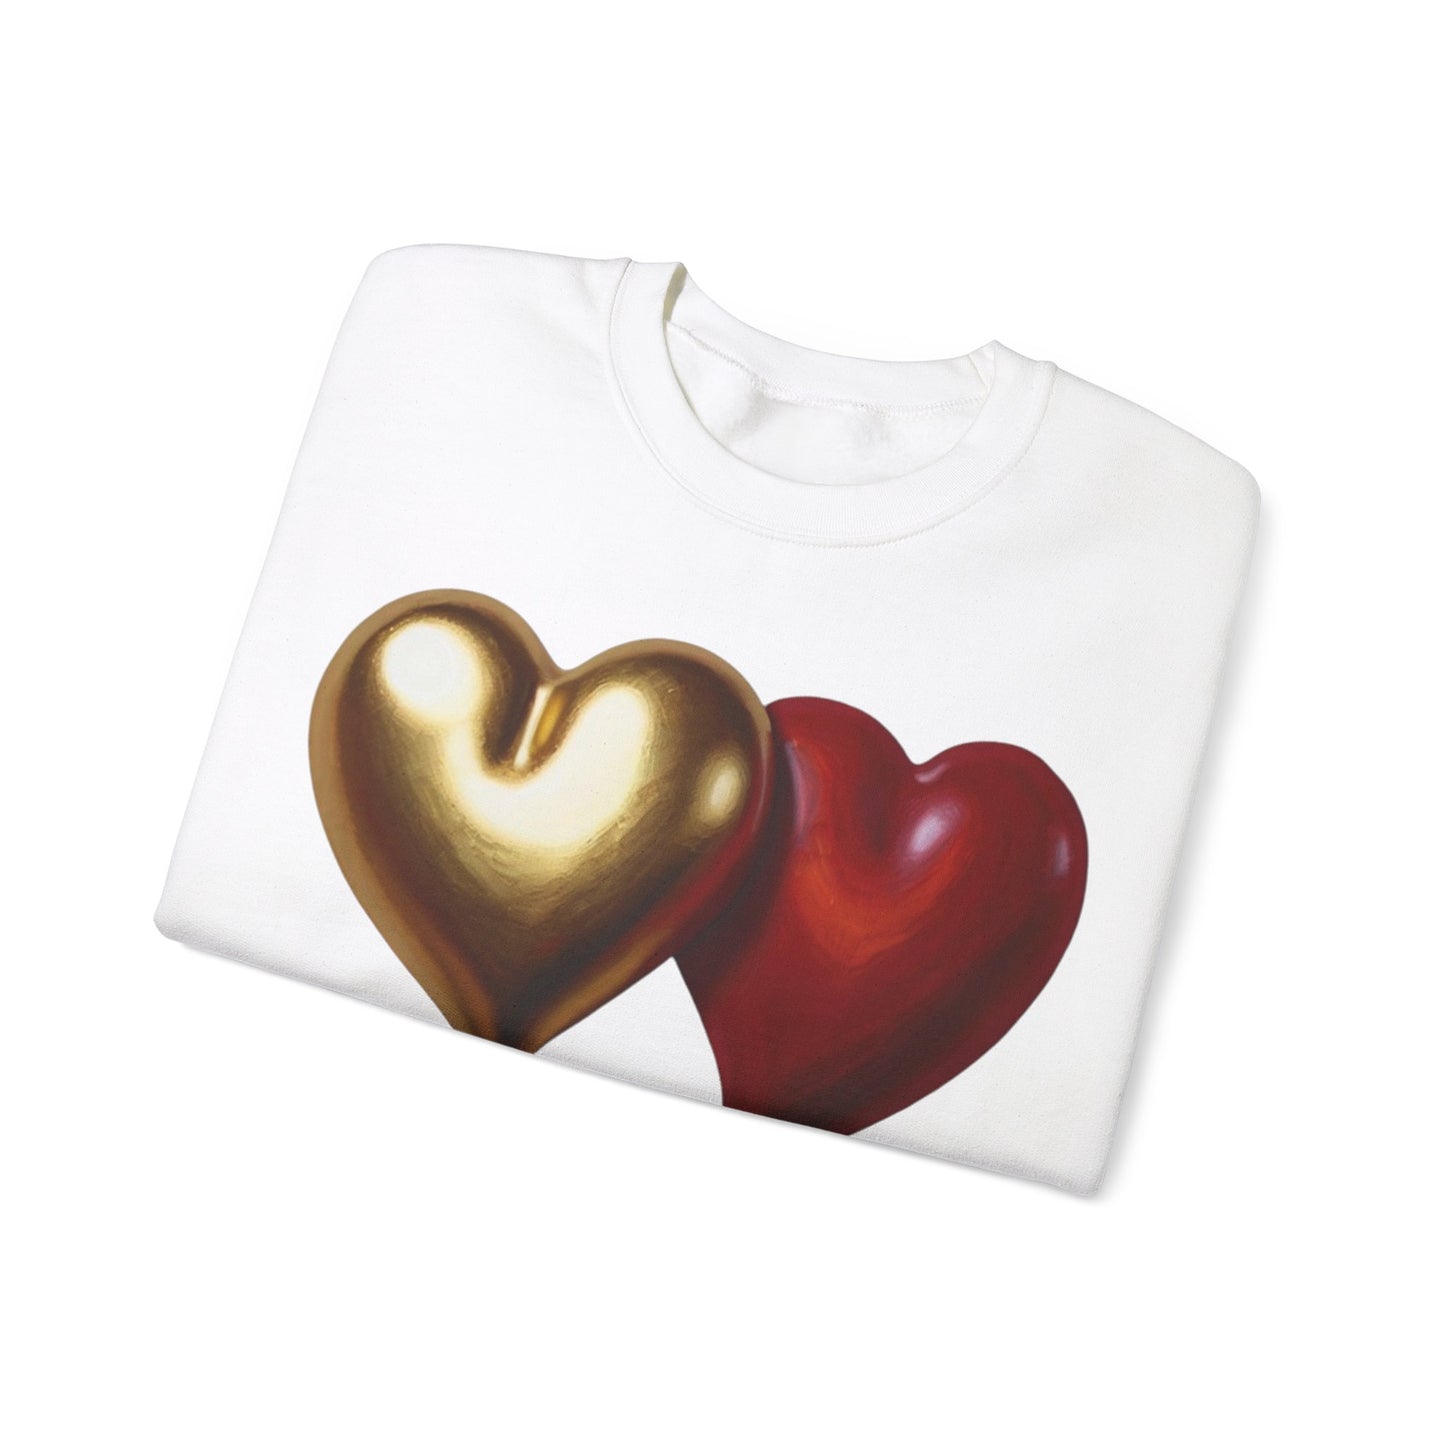 Gold And Red Love Heart - Unisex Crewneck Sweatshirt